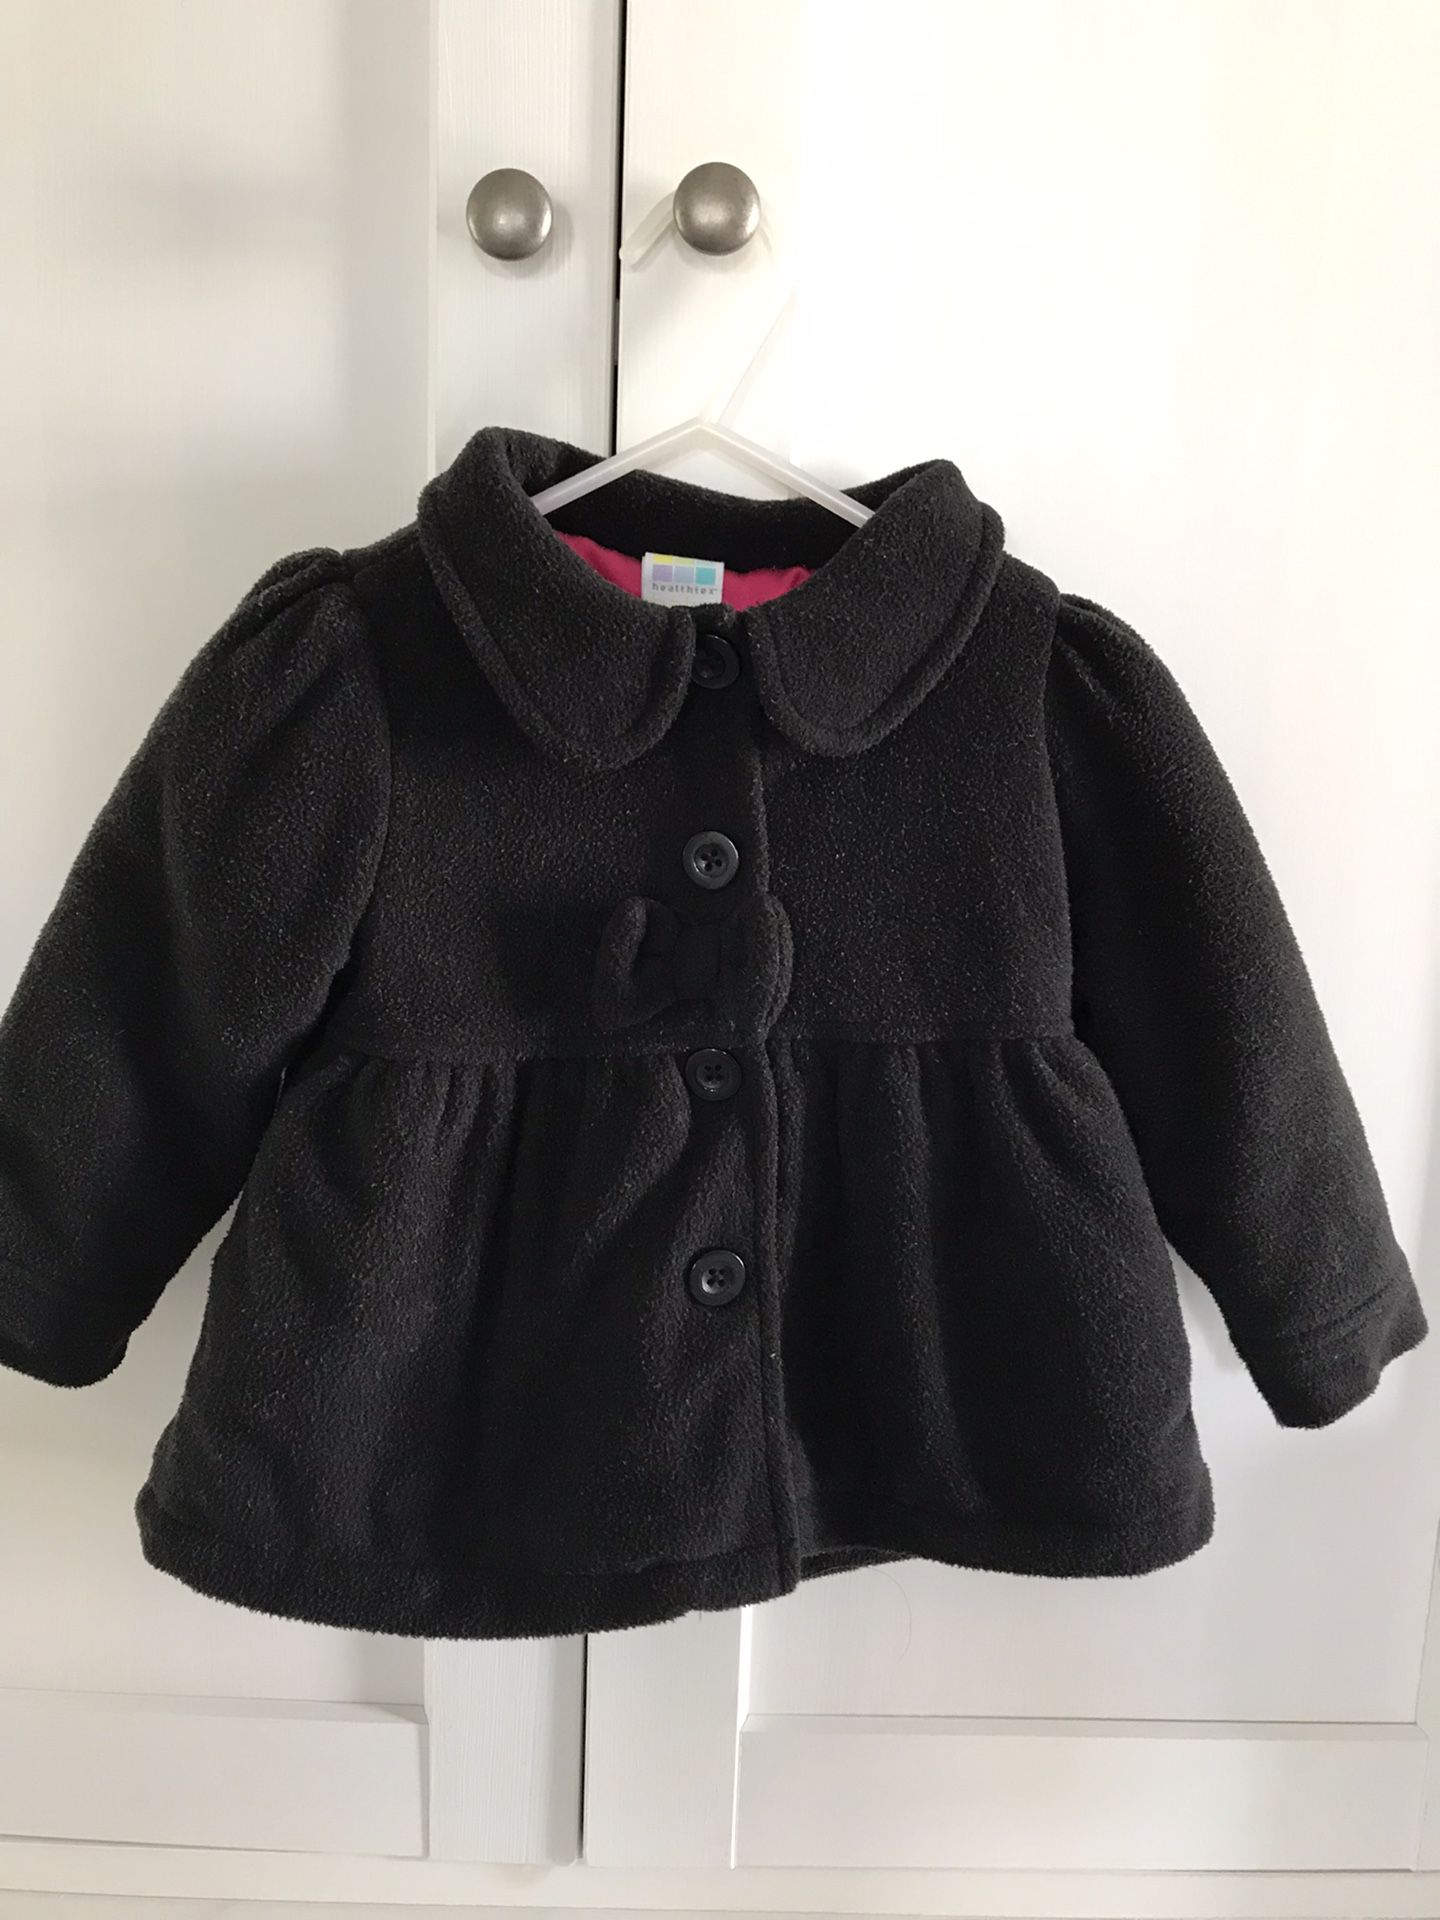 Girls Size 12-18 Months Coat